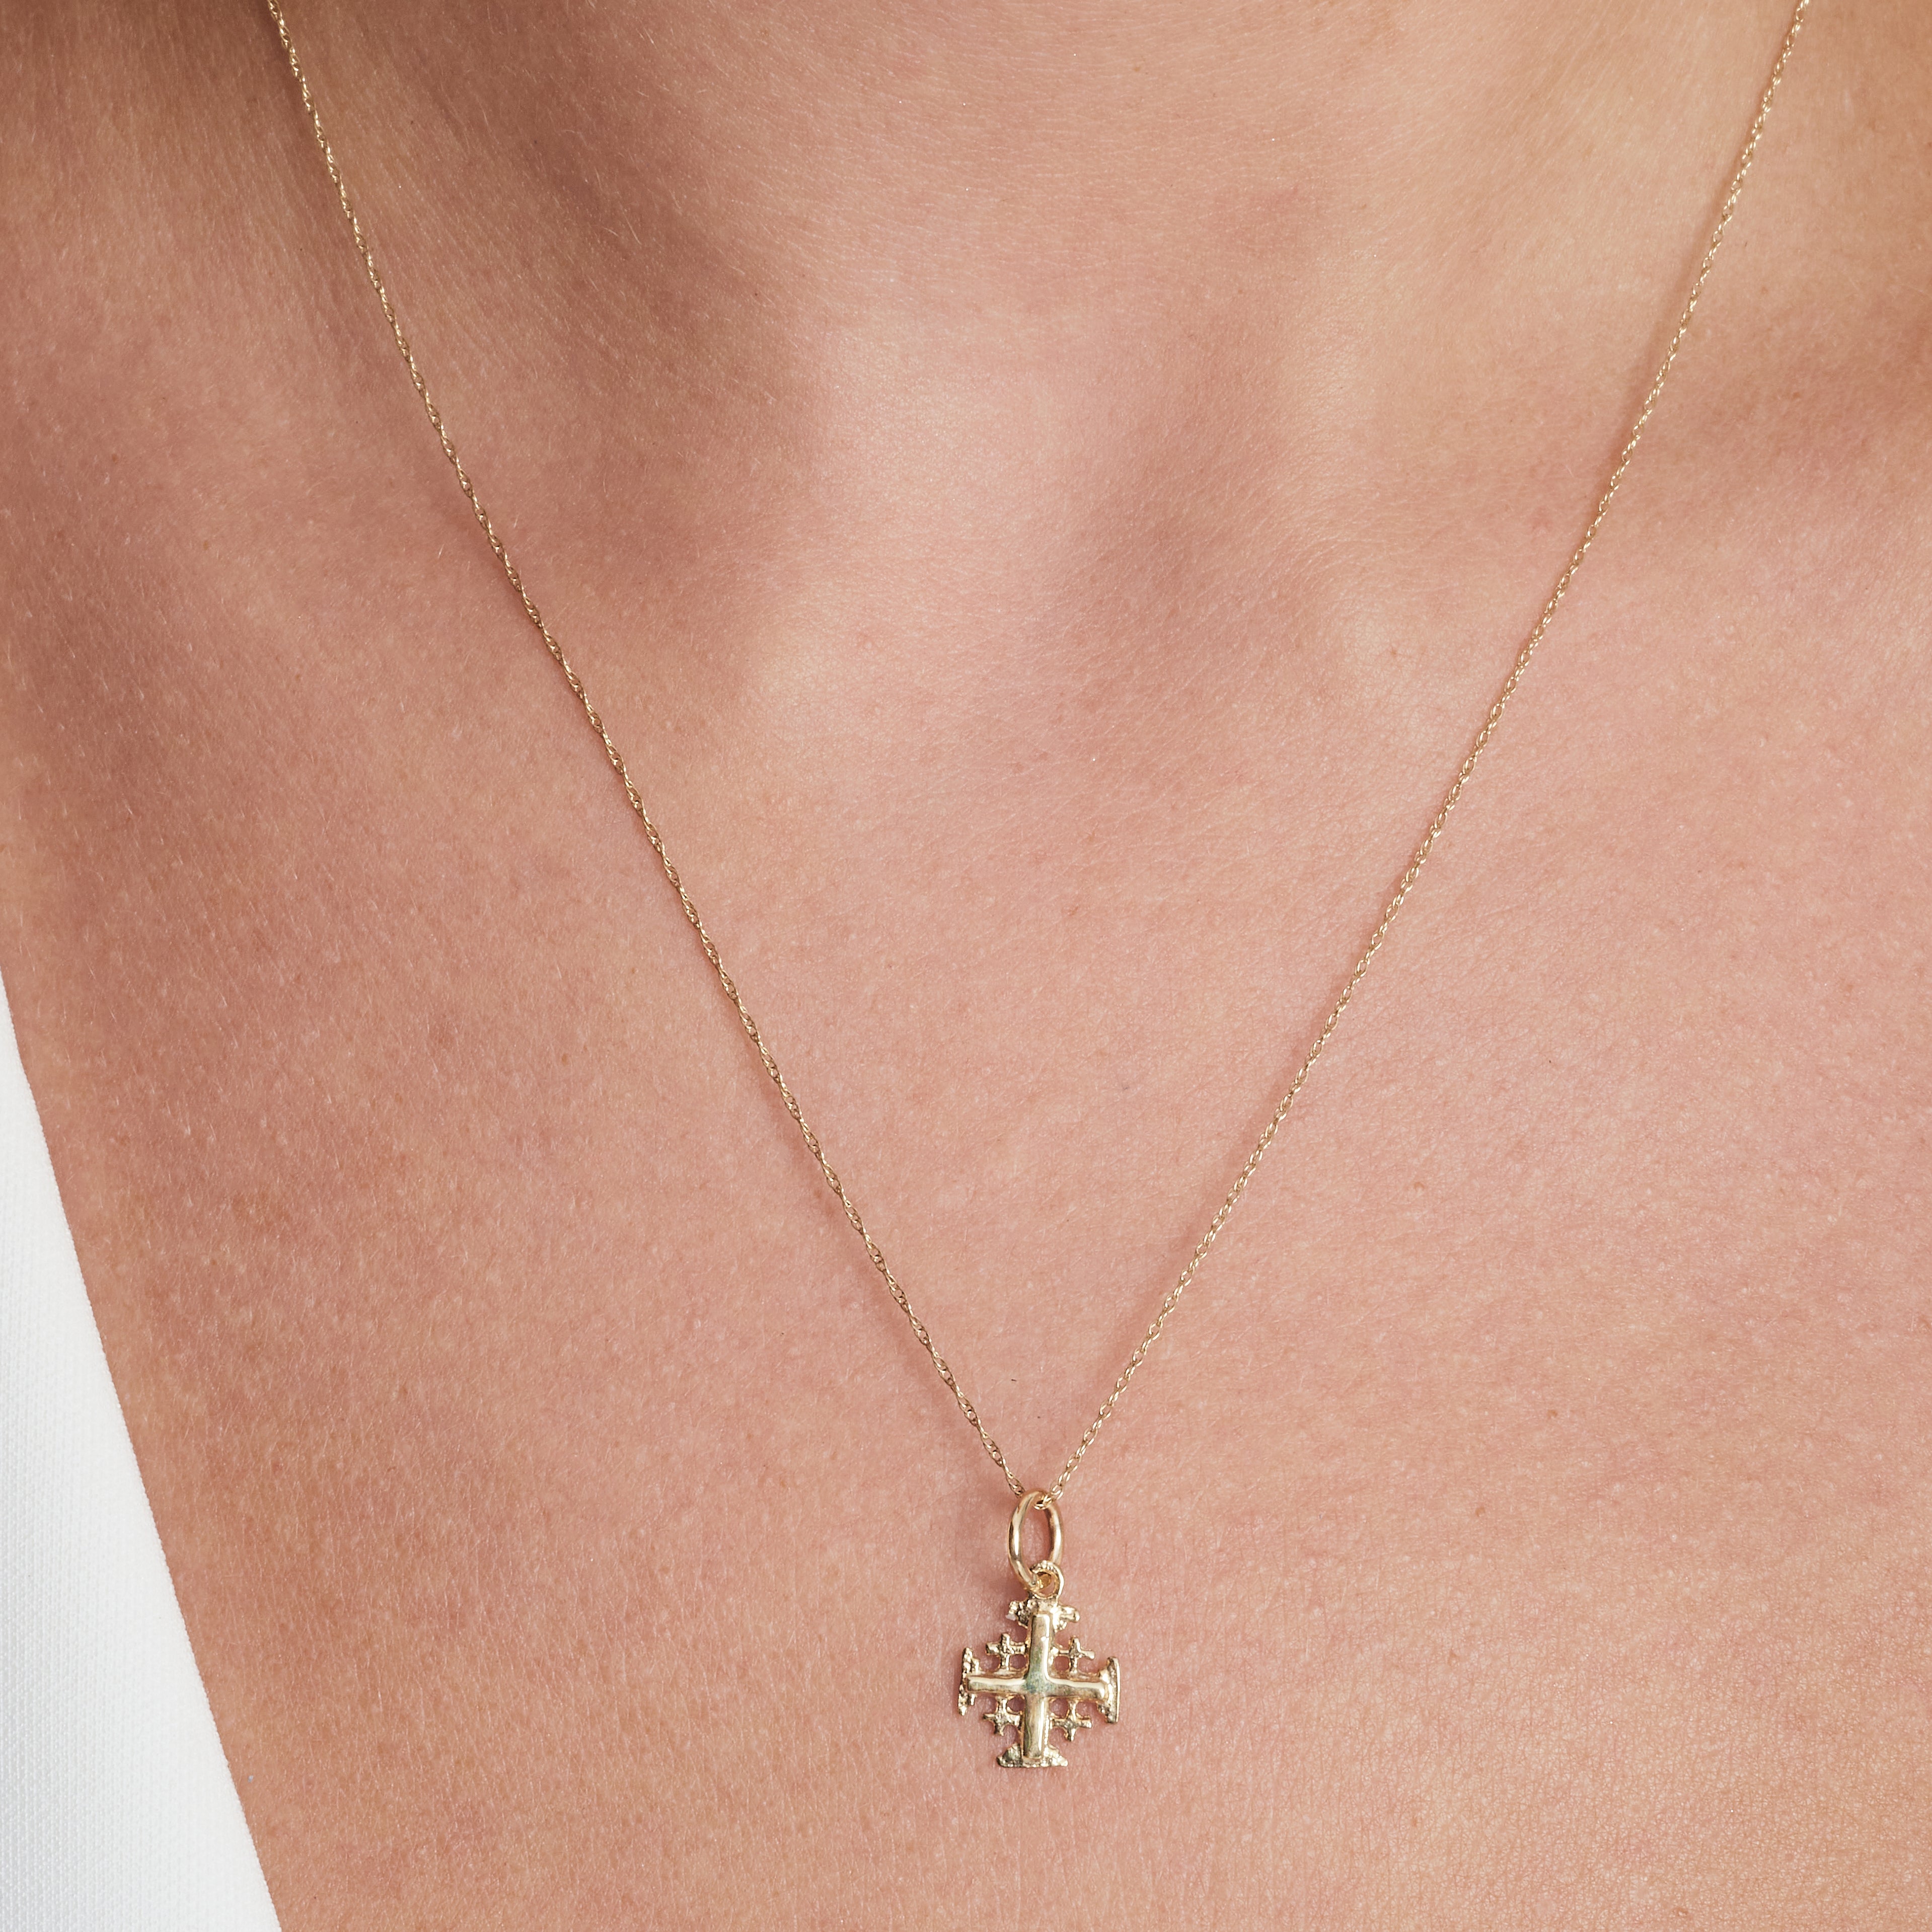 Jerusalem Silver 925 Cross Necklace Open Pendant Sterling Plated Opens Chain  | eBay